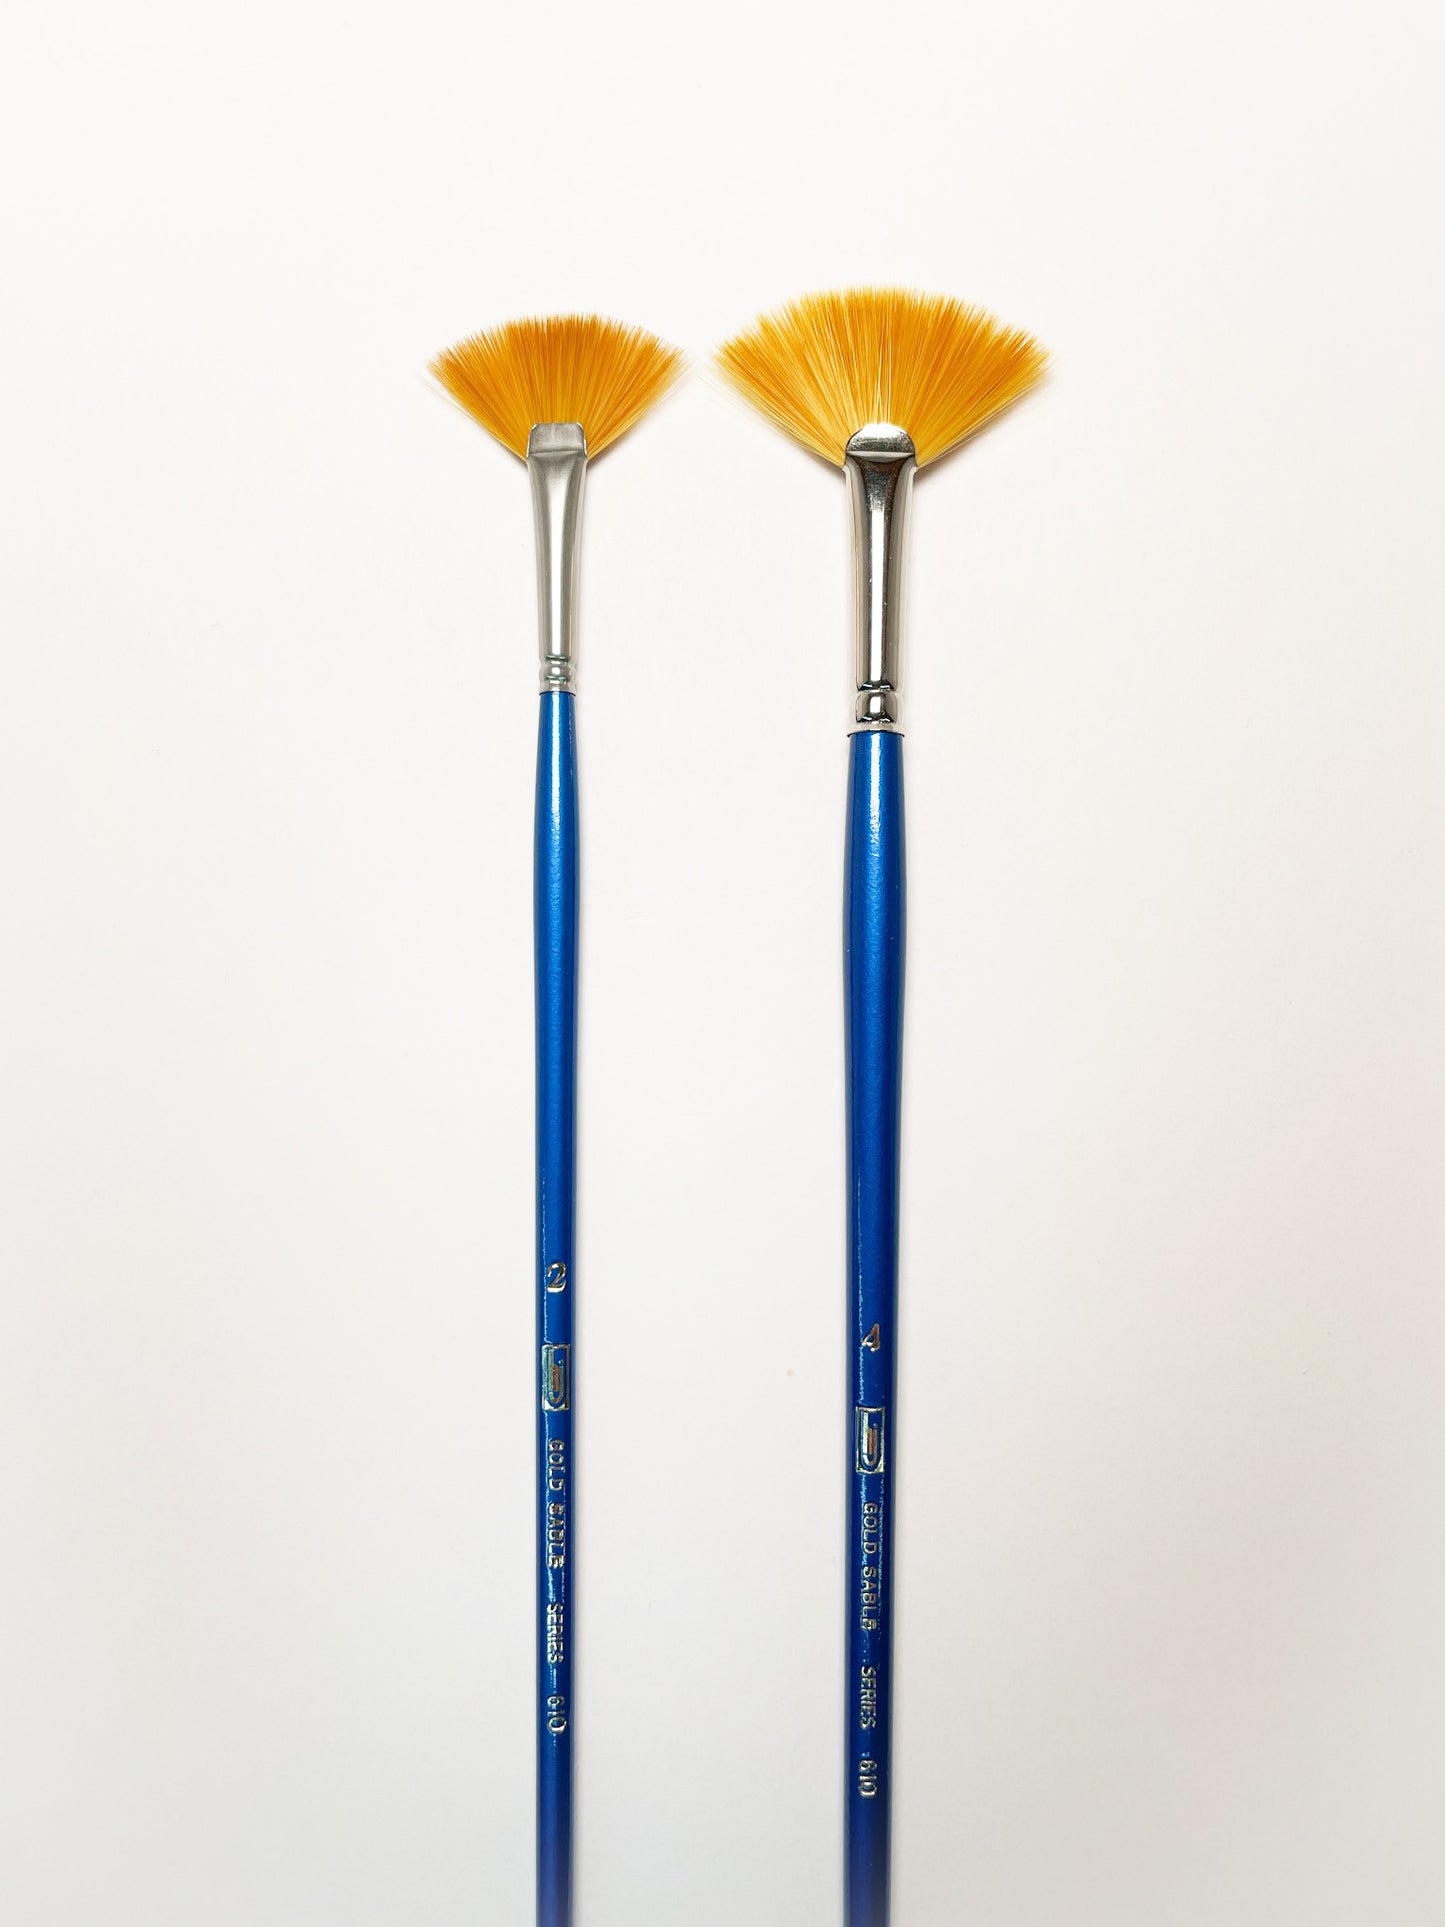 Heinz Jordan Series 610 Gold Sable Fan Paint Brushes (Oil & Acrylic)